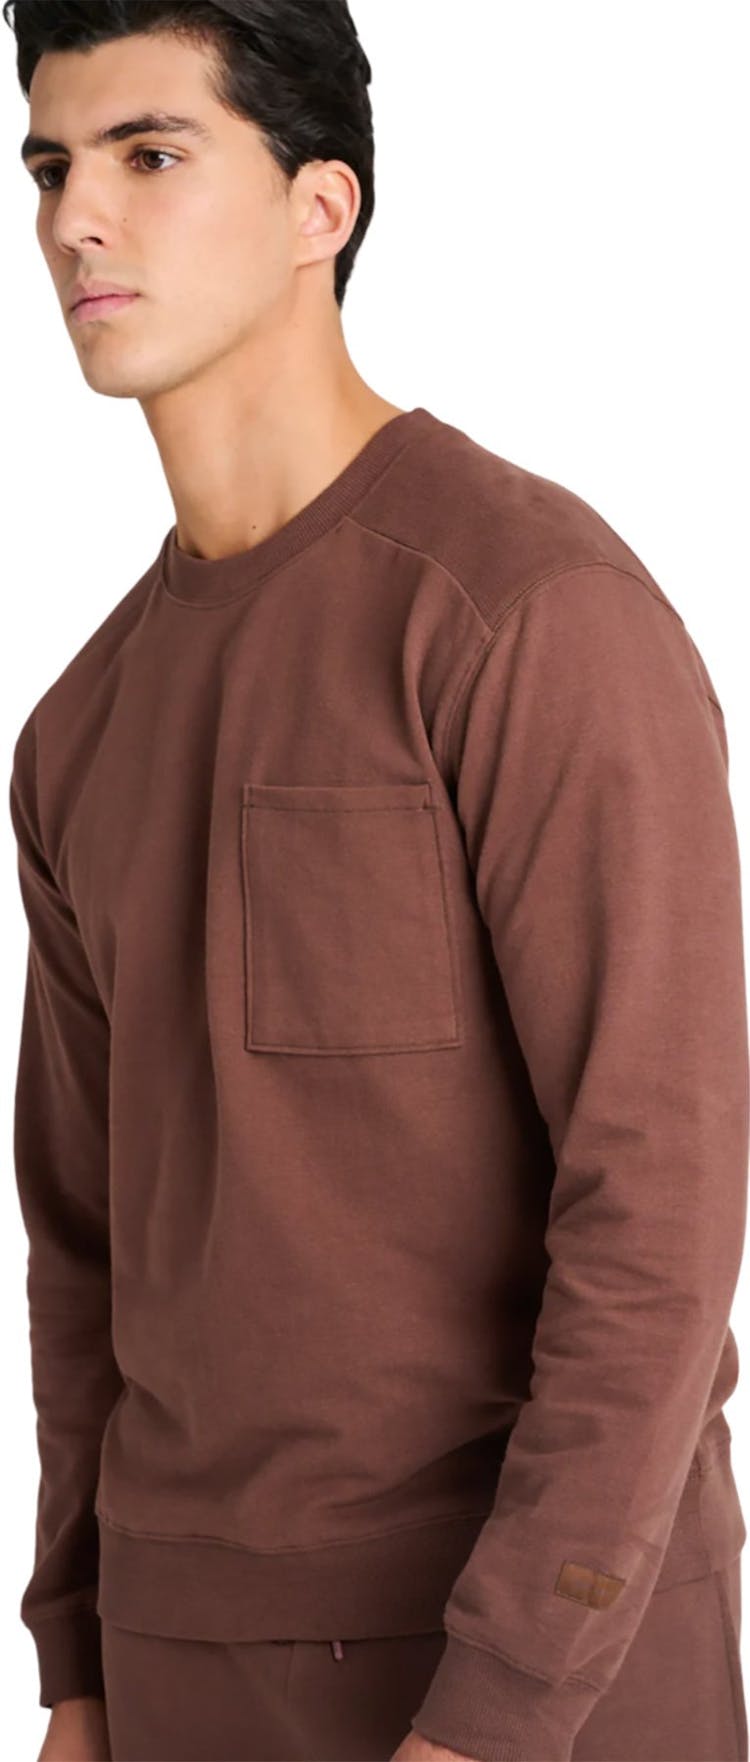 Product gallery image number 4 for product Organic Comfort Crewneck Sweatshirt - Men's